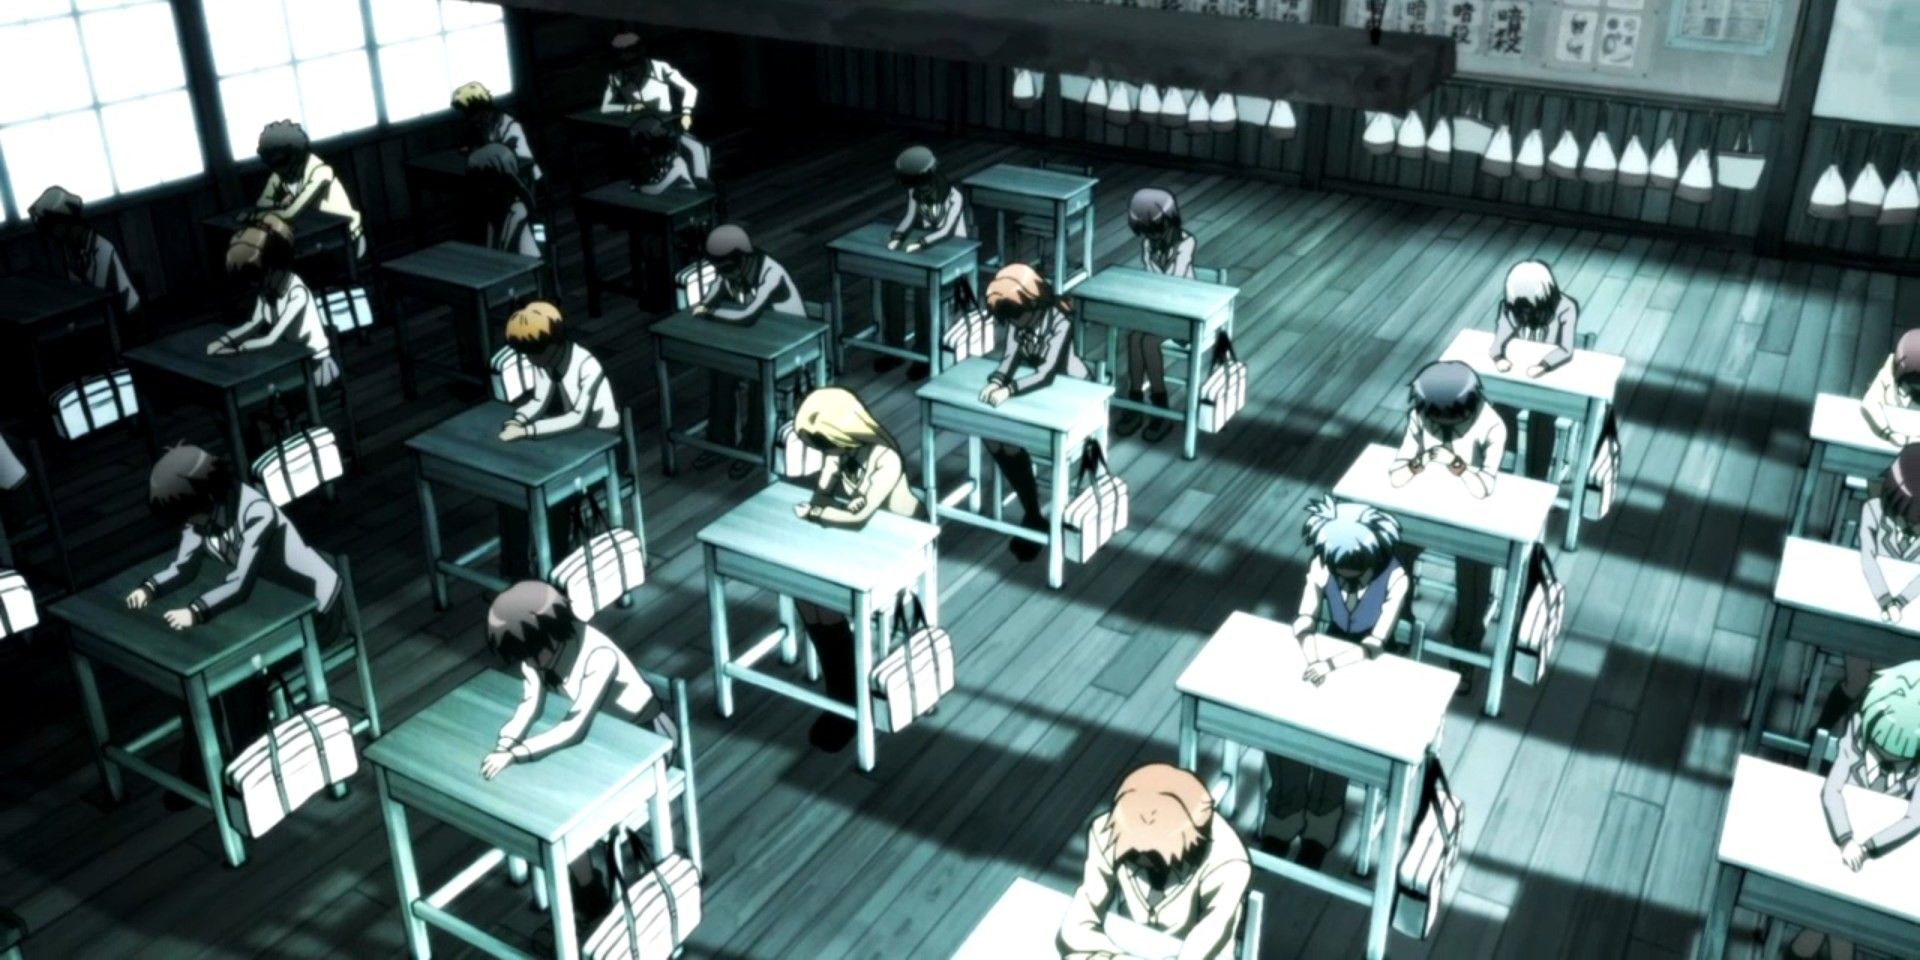 Assassination Classroom's 3-E has little hope